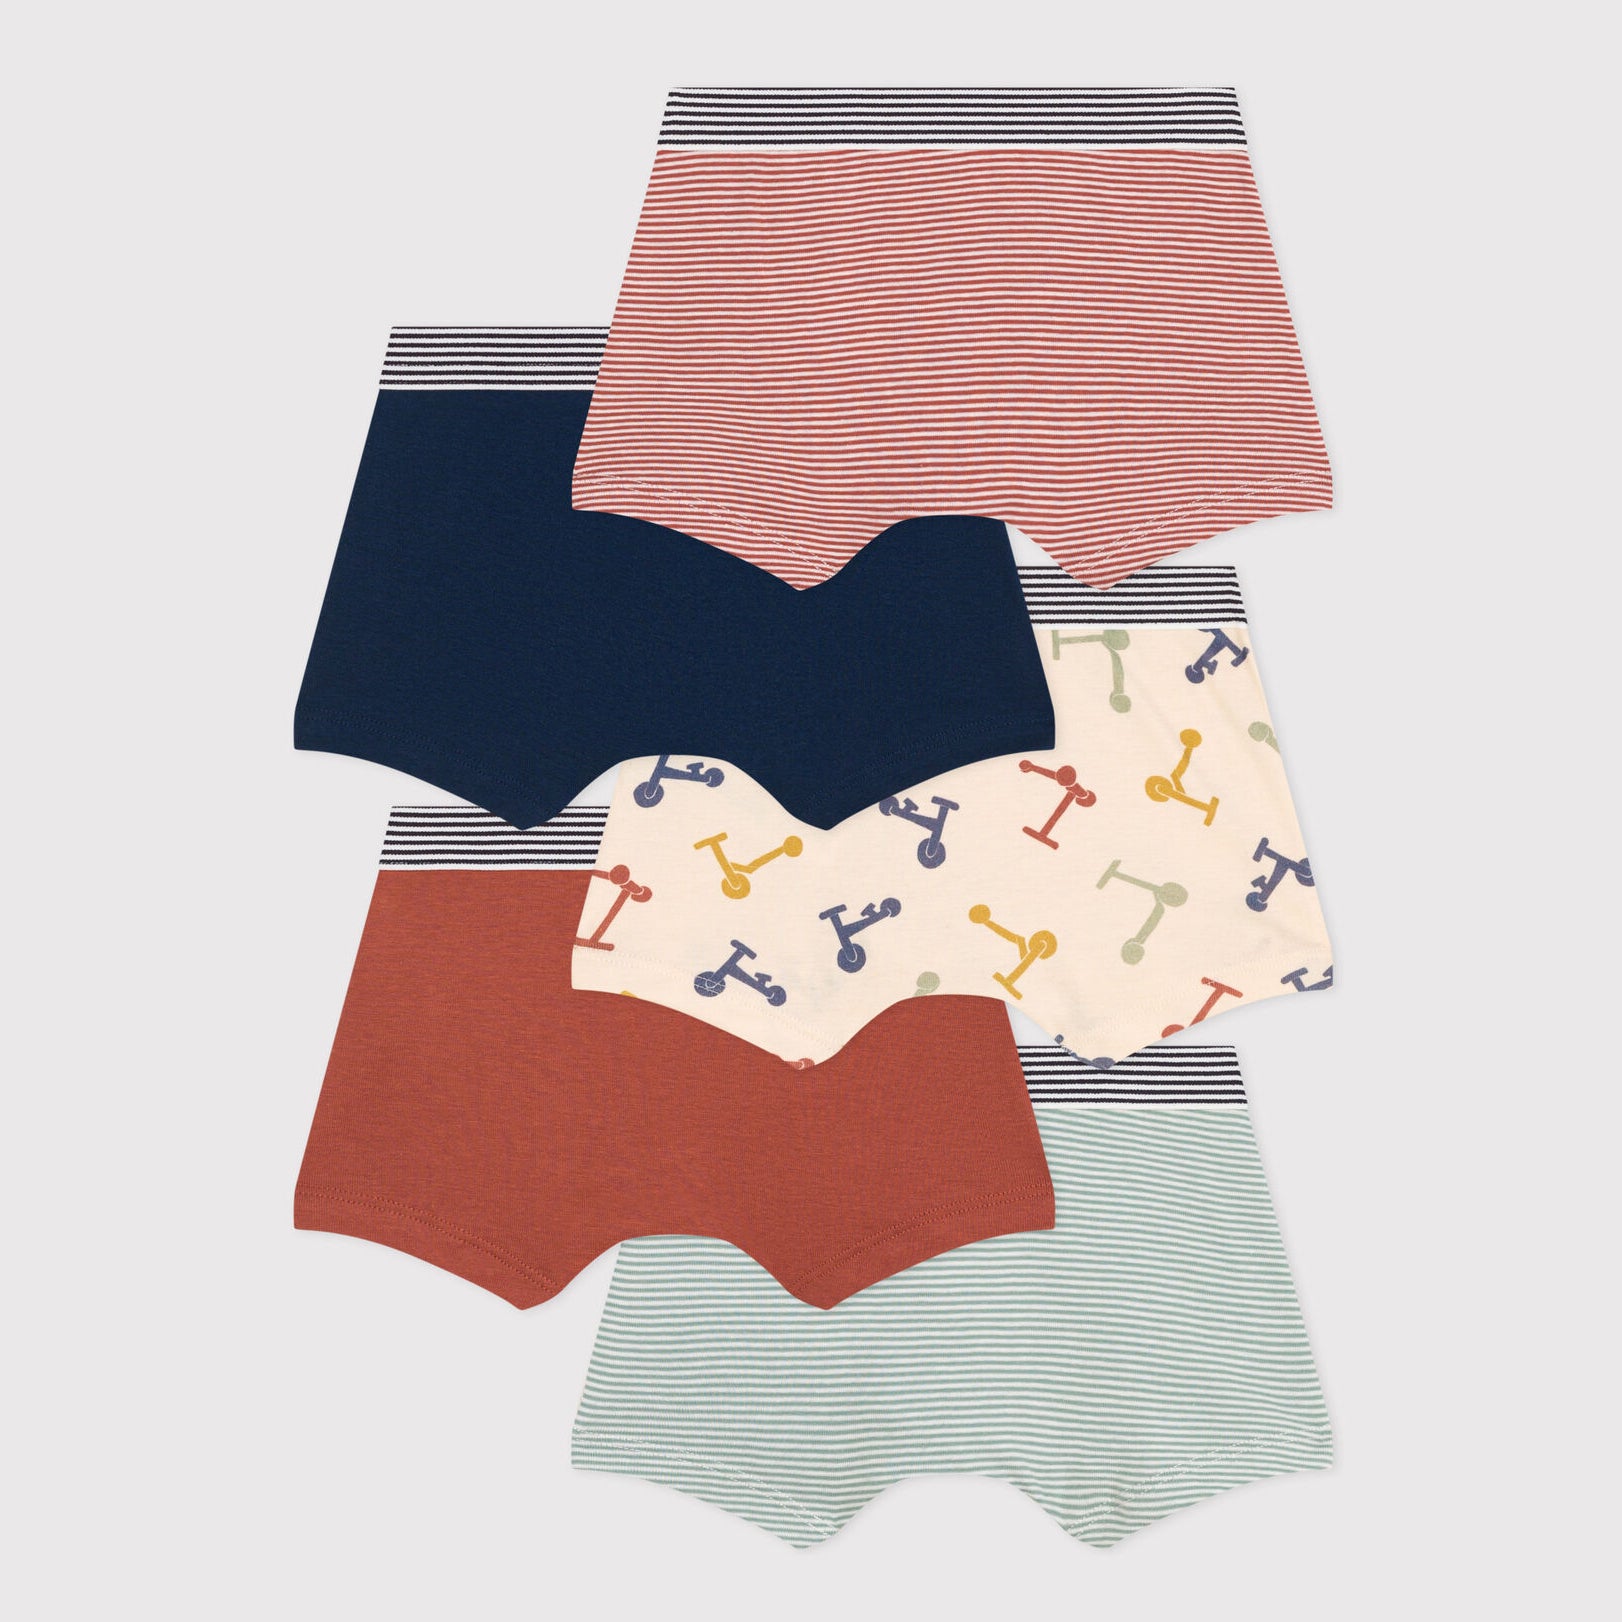 Boys Multicolor Cotton Underwear Set(5 Pack)